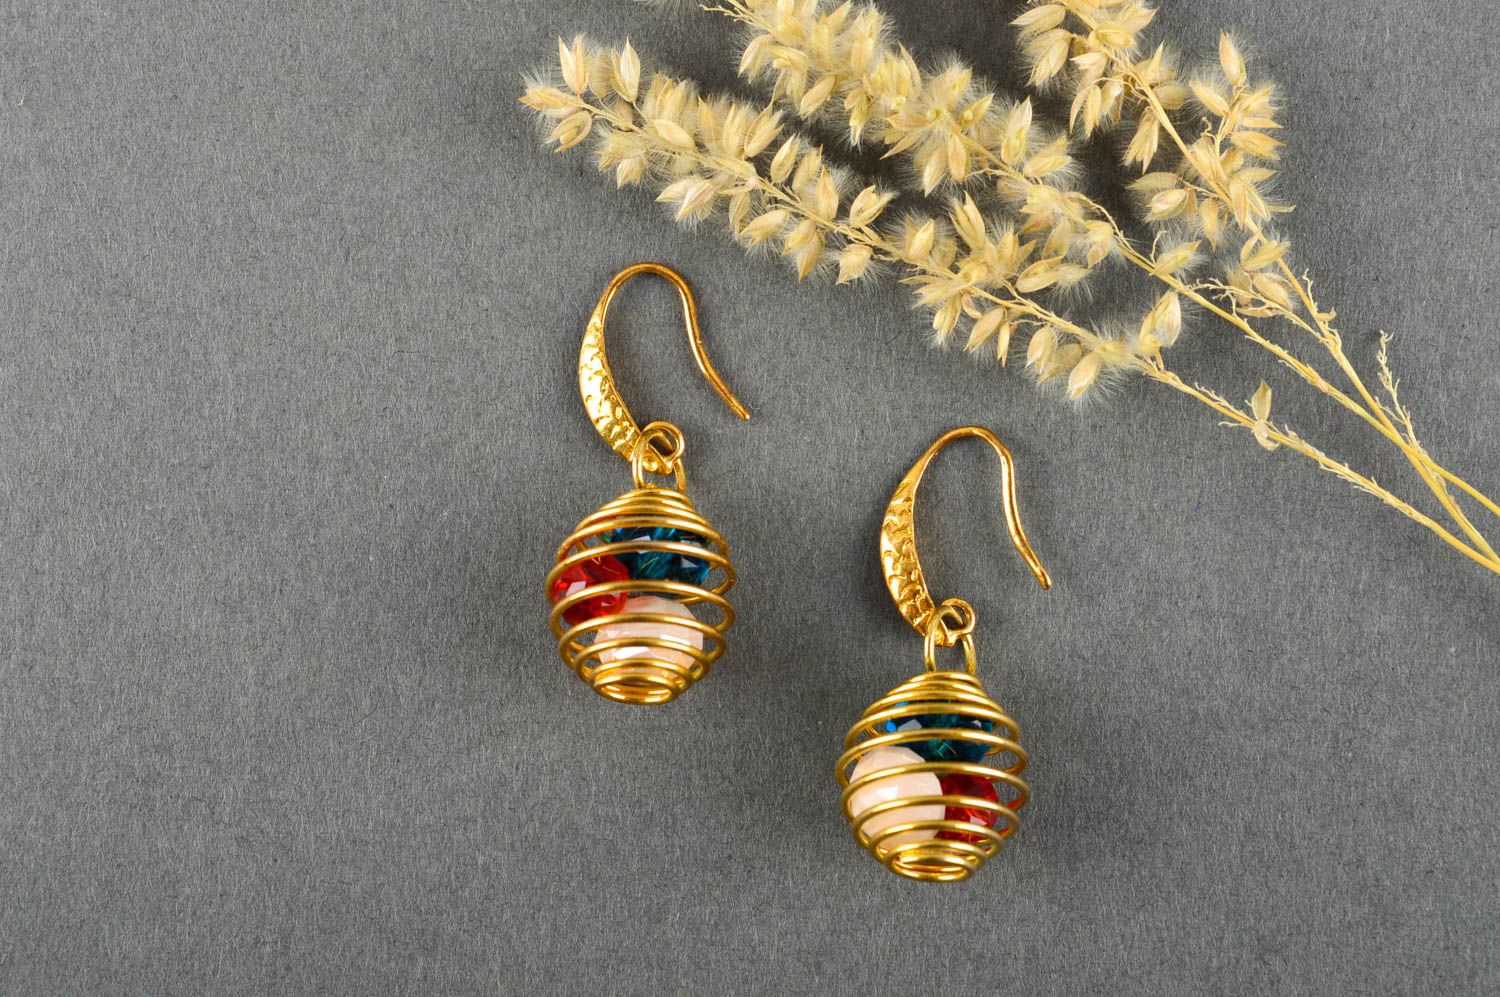 Cute earrings designer jewelry handmade earrings womens accessories gift ideas photo 1